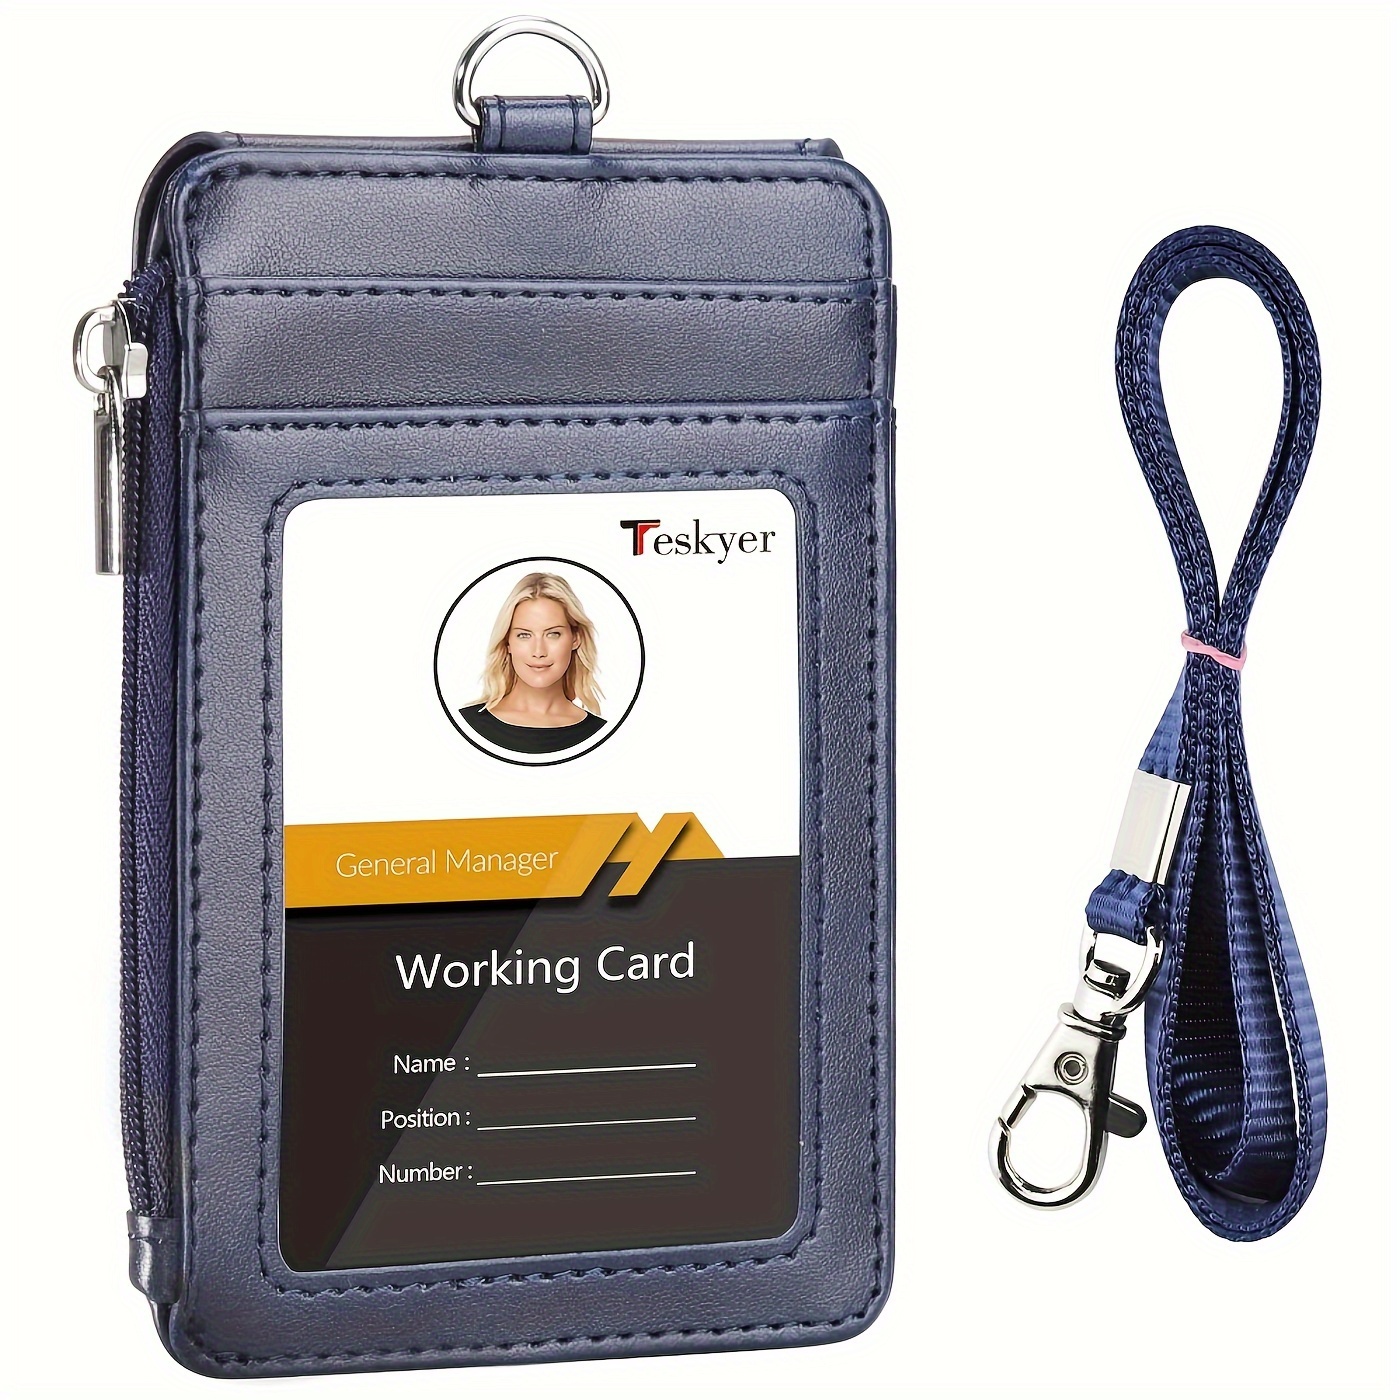  Teskyer ID Badge Holder with Retractable Lanyard, 4